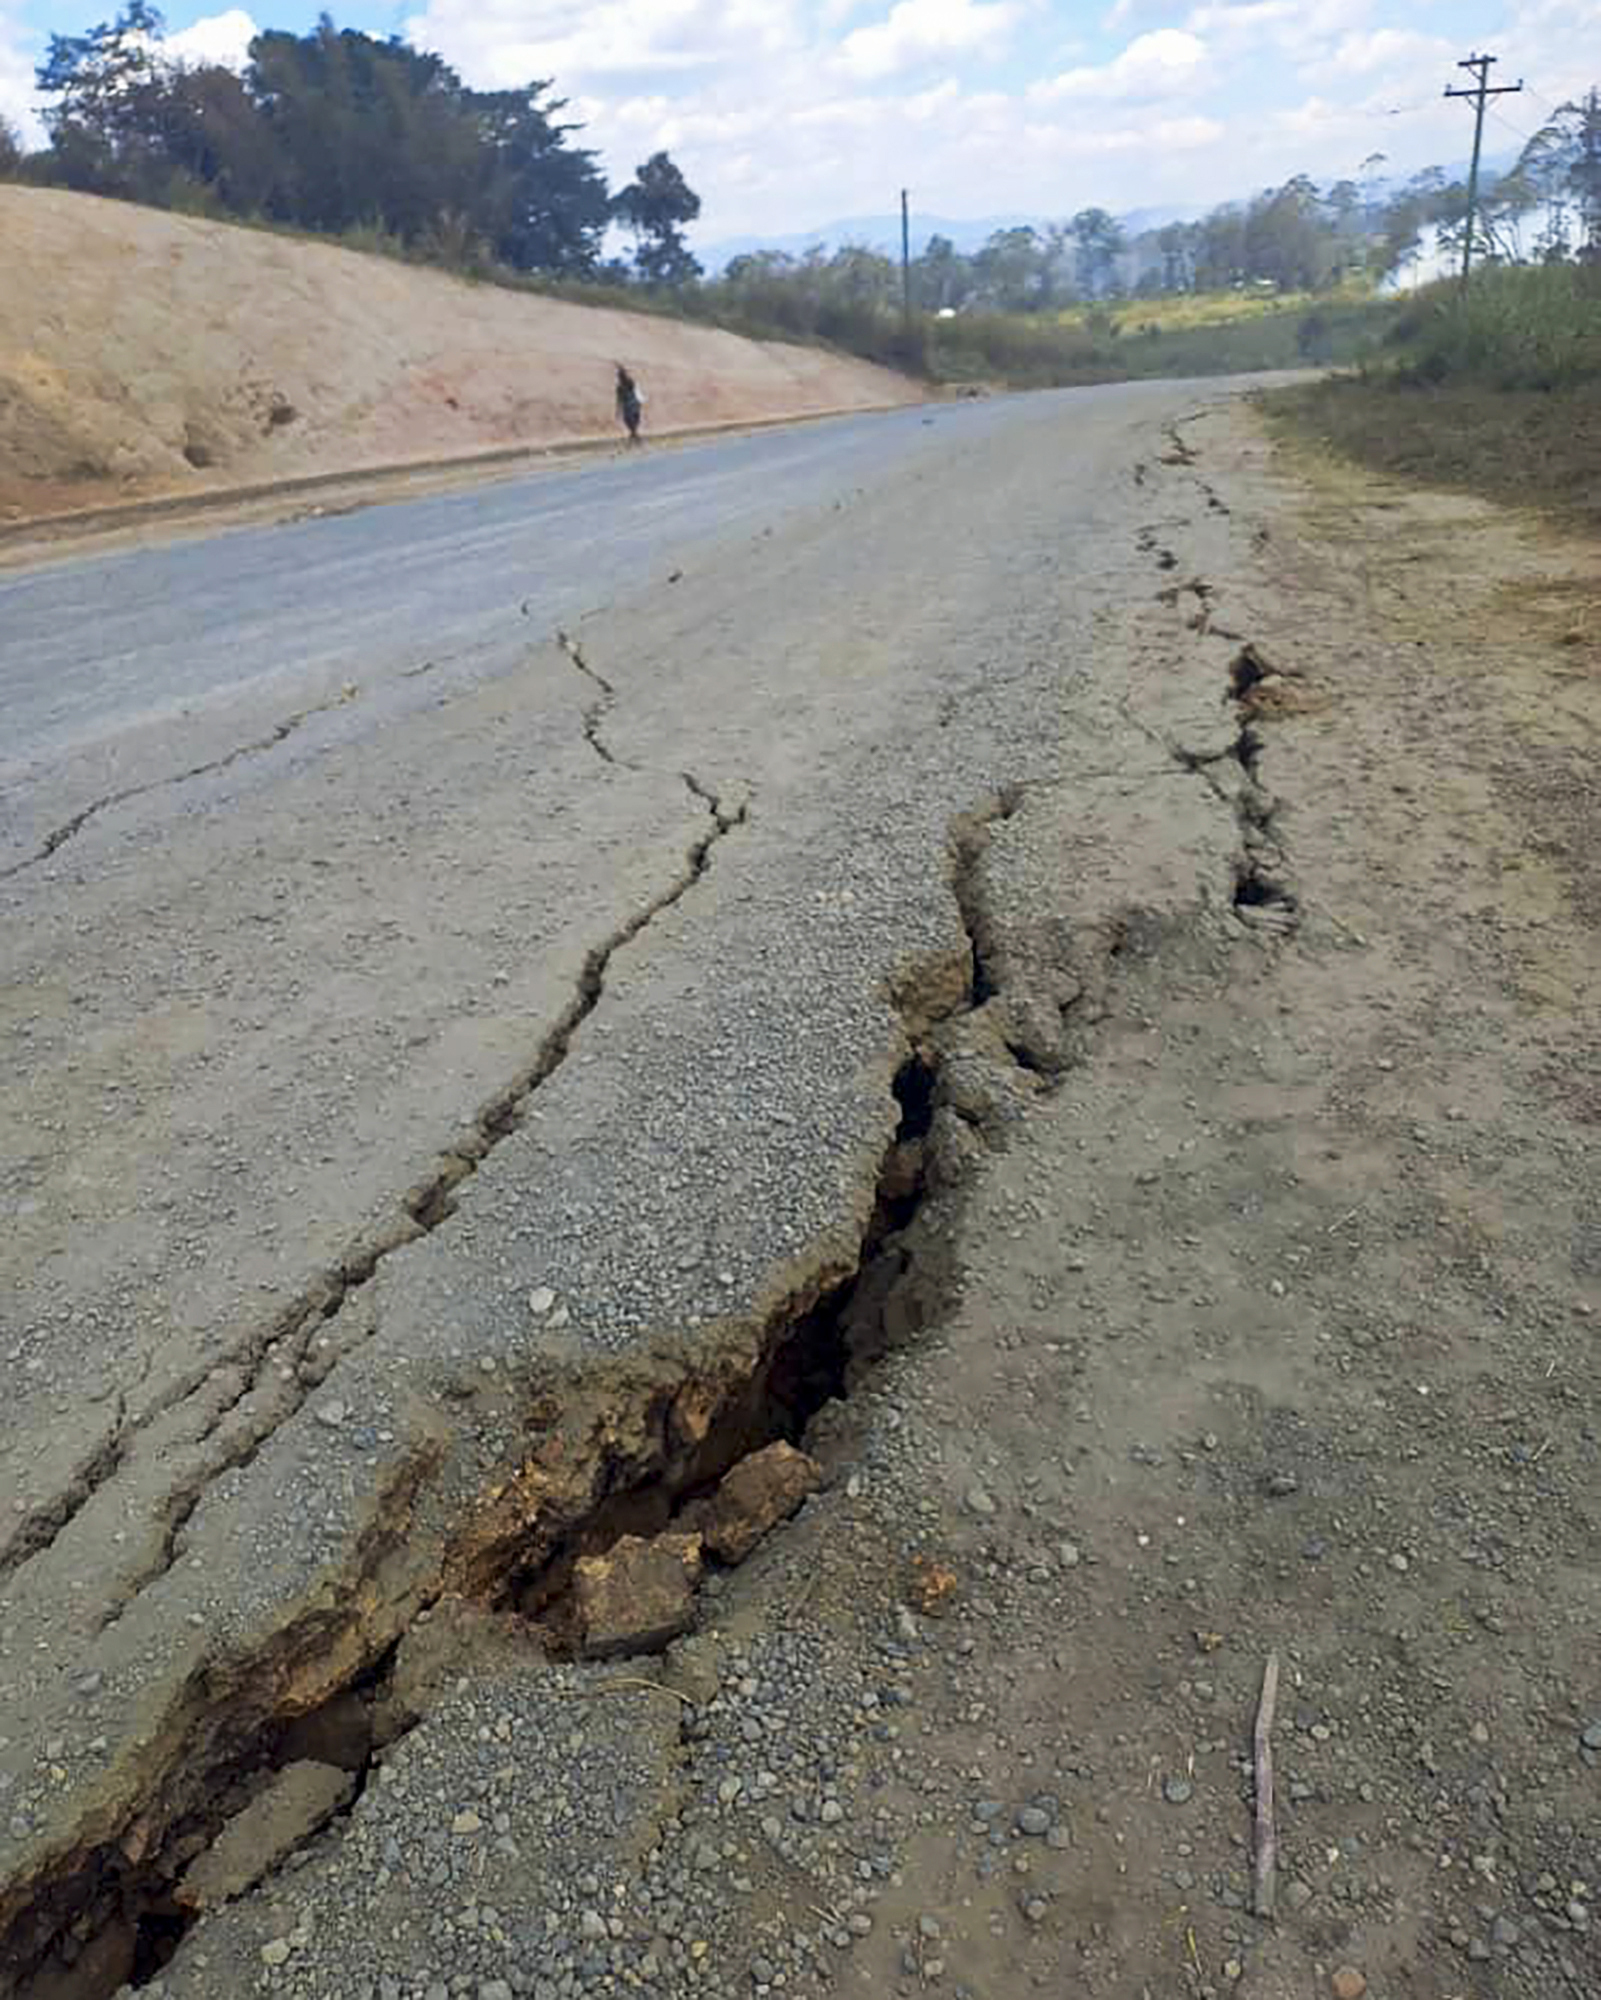 Debris lies strewn across a highway following a landslide near the town of Kainantu